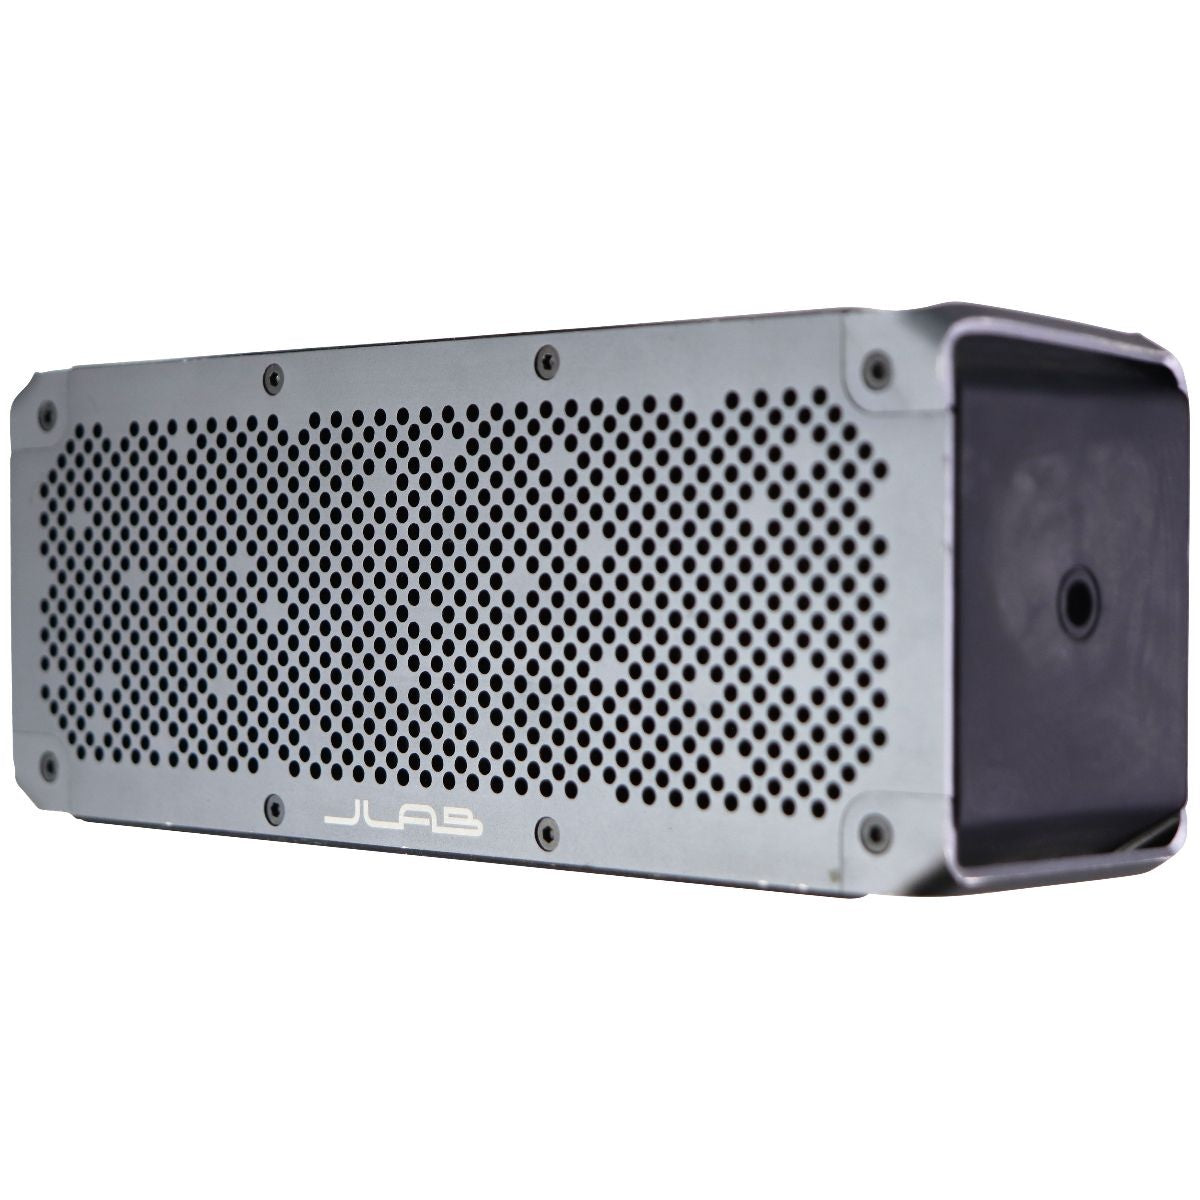 JLab Audio Crasher XL Portable Bluetooth Speaker - Gunmetal / Missing Port Cover Cell Phone - Audio Docks & Speakers JLAB    - Simple Cell Bulk Wholesale Pricing - USA Seller